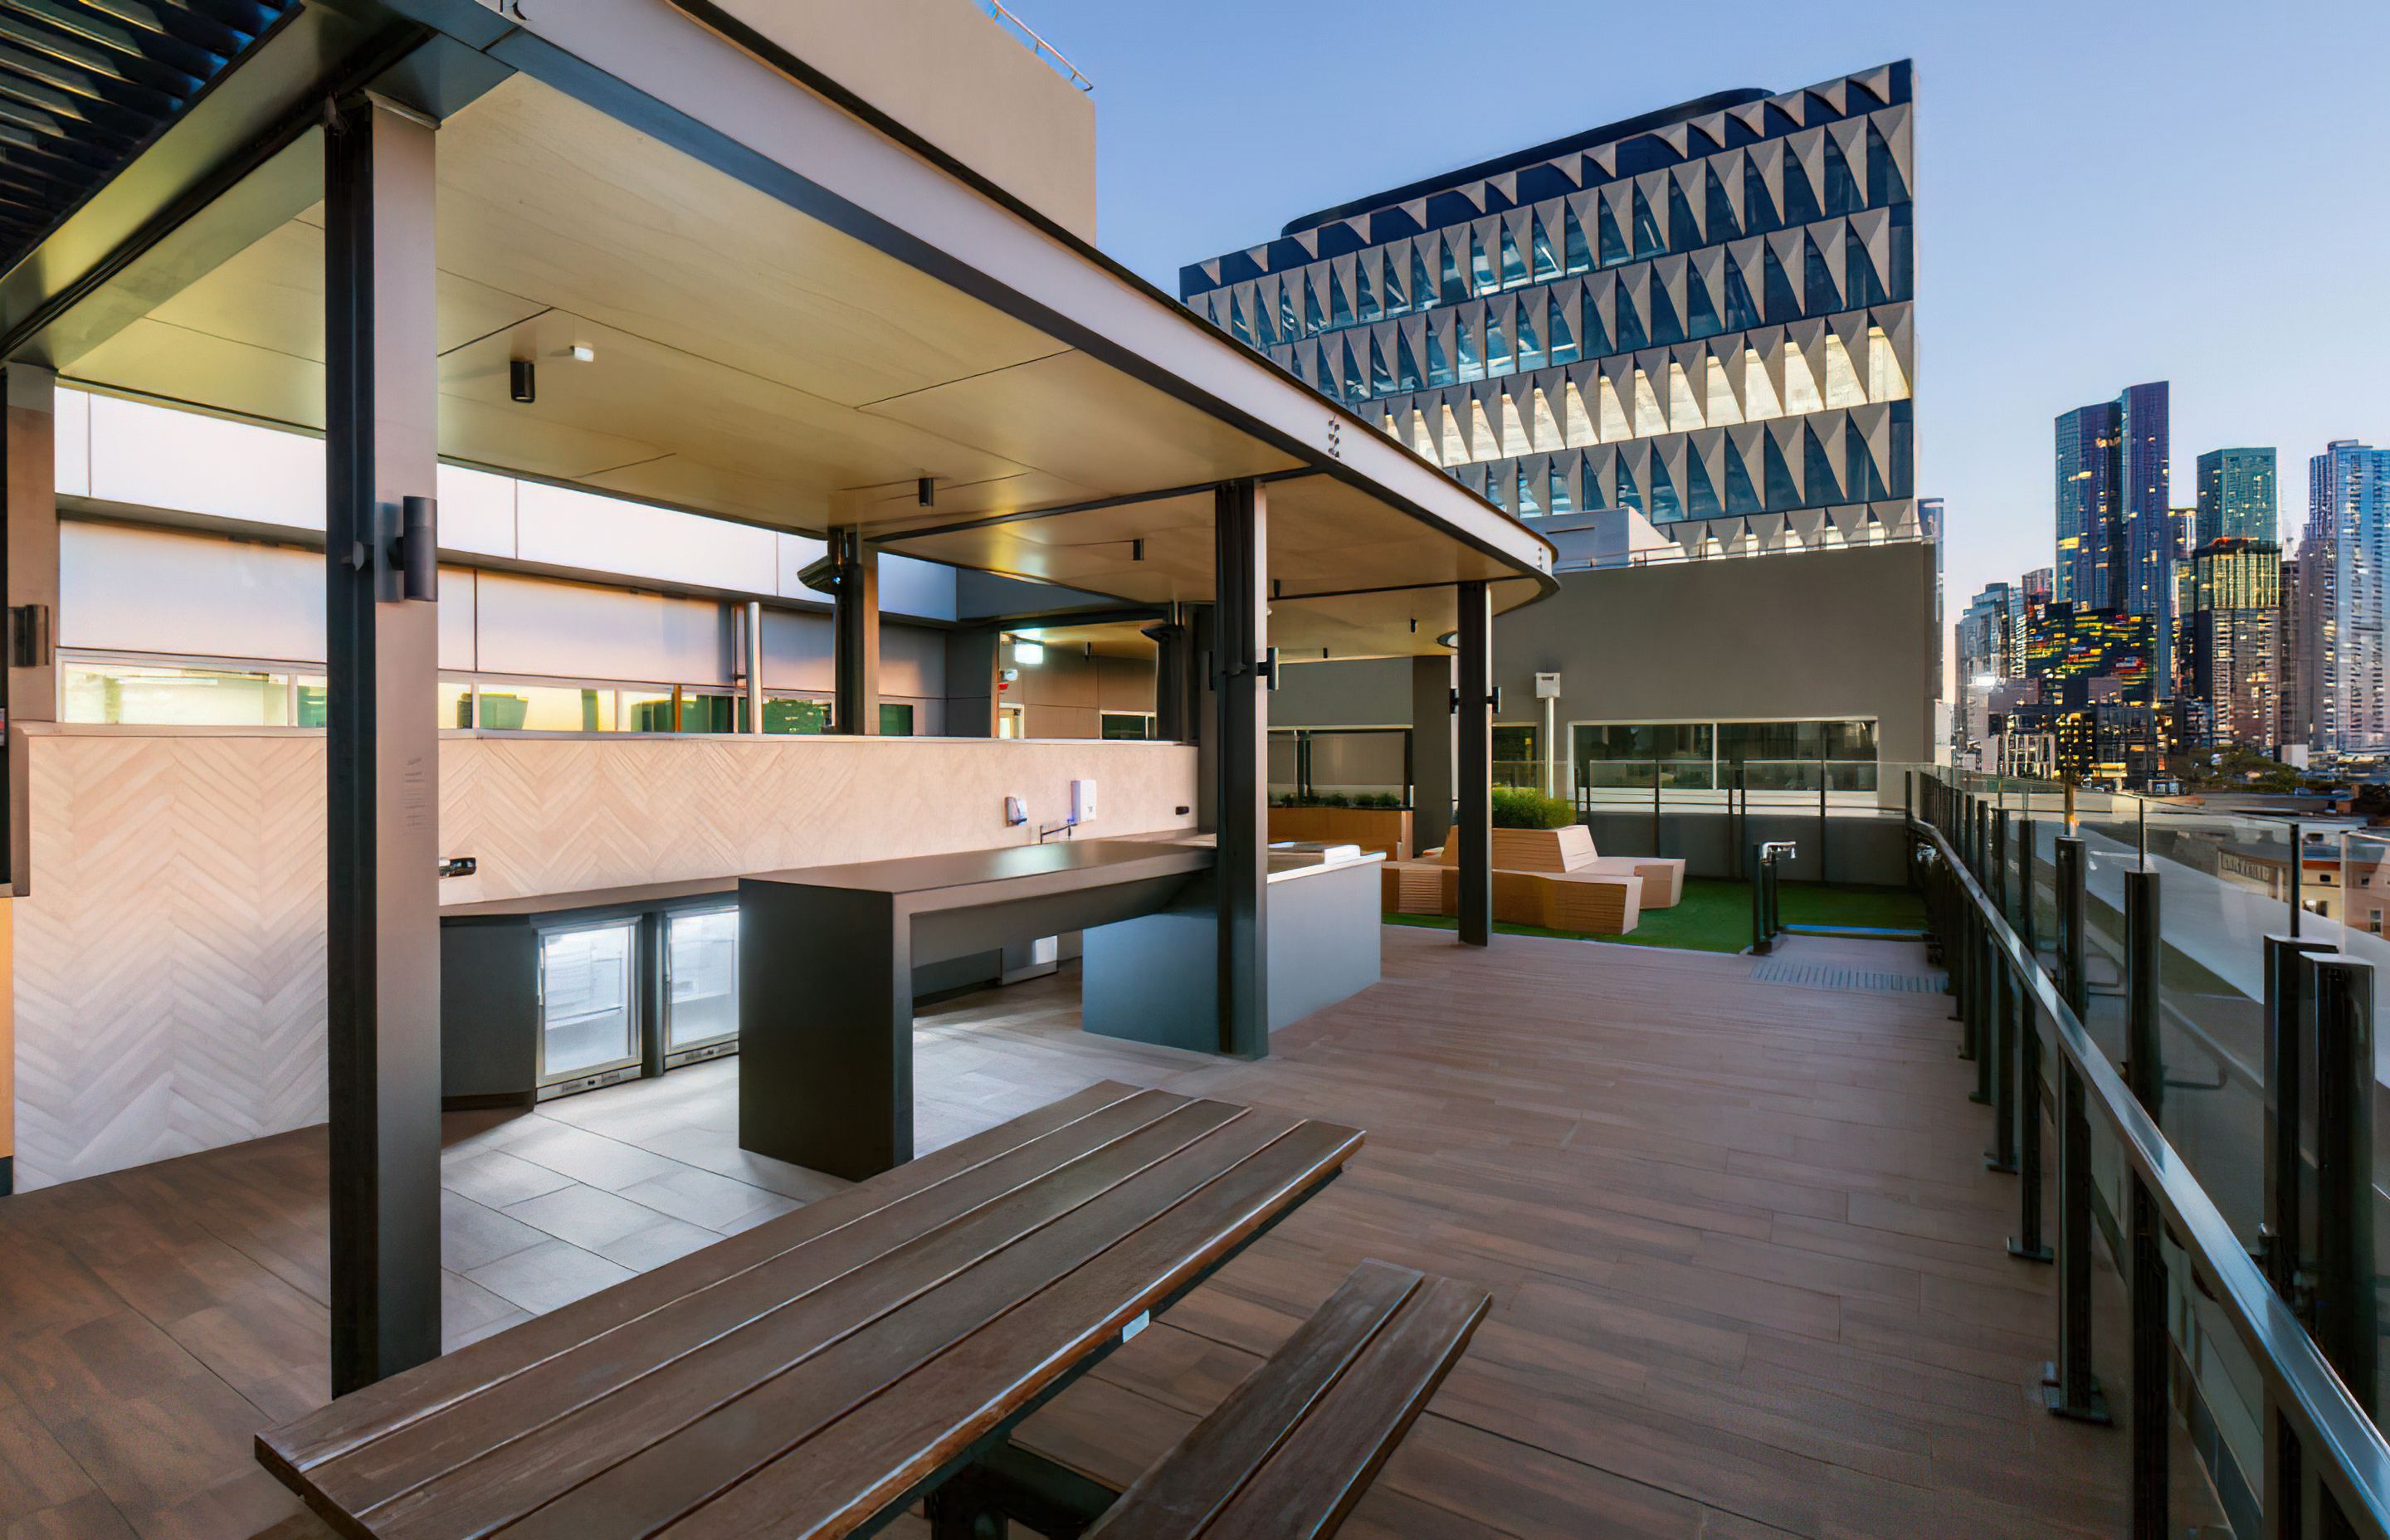 Royal Dental Hospital - Roof Top Terrace